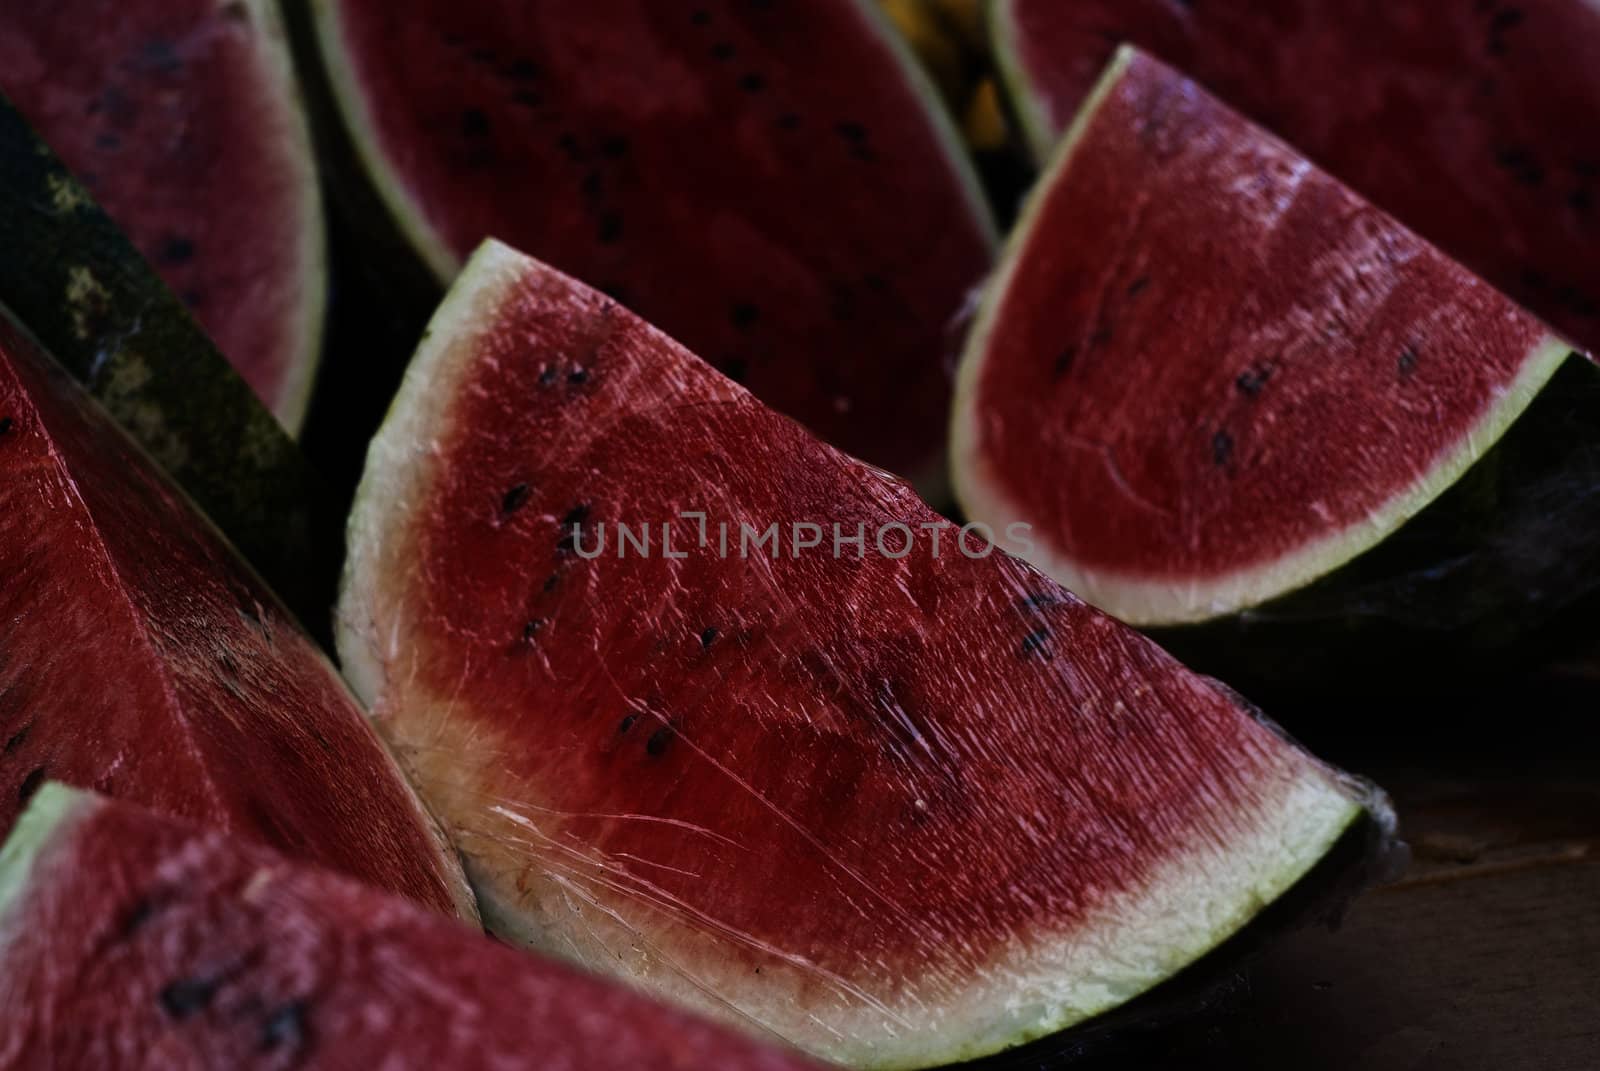 fresh water melon slices by gandolfocannatella